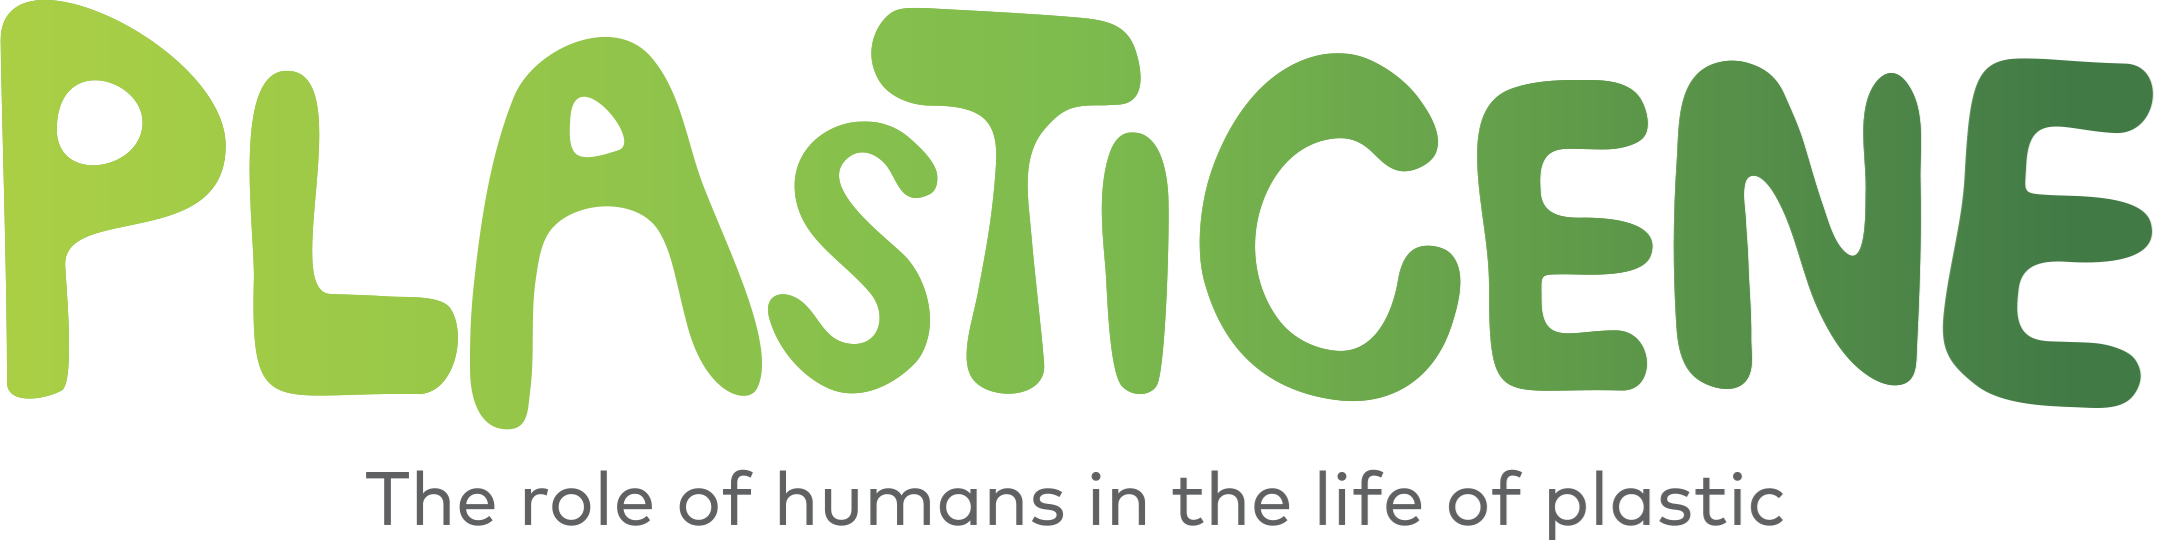 Plasticene logo 1